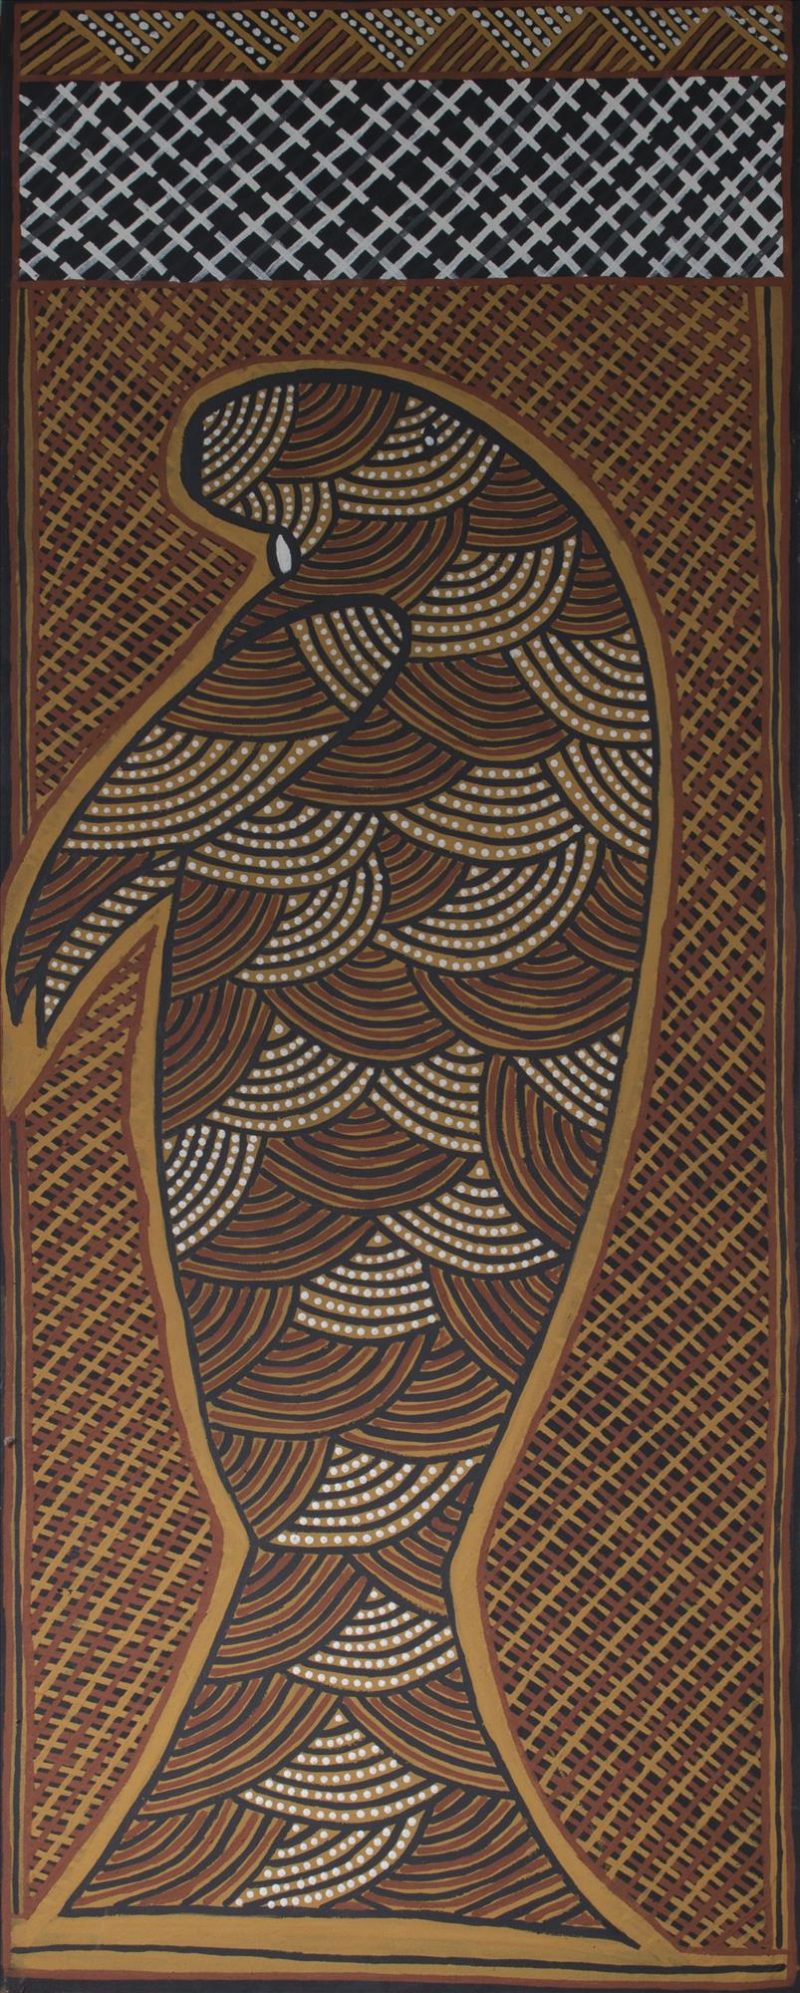 Mantuwujini (Dugong) - Painting - Raymond Bush